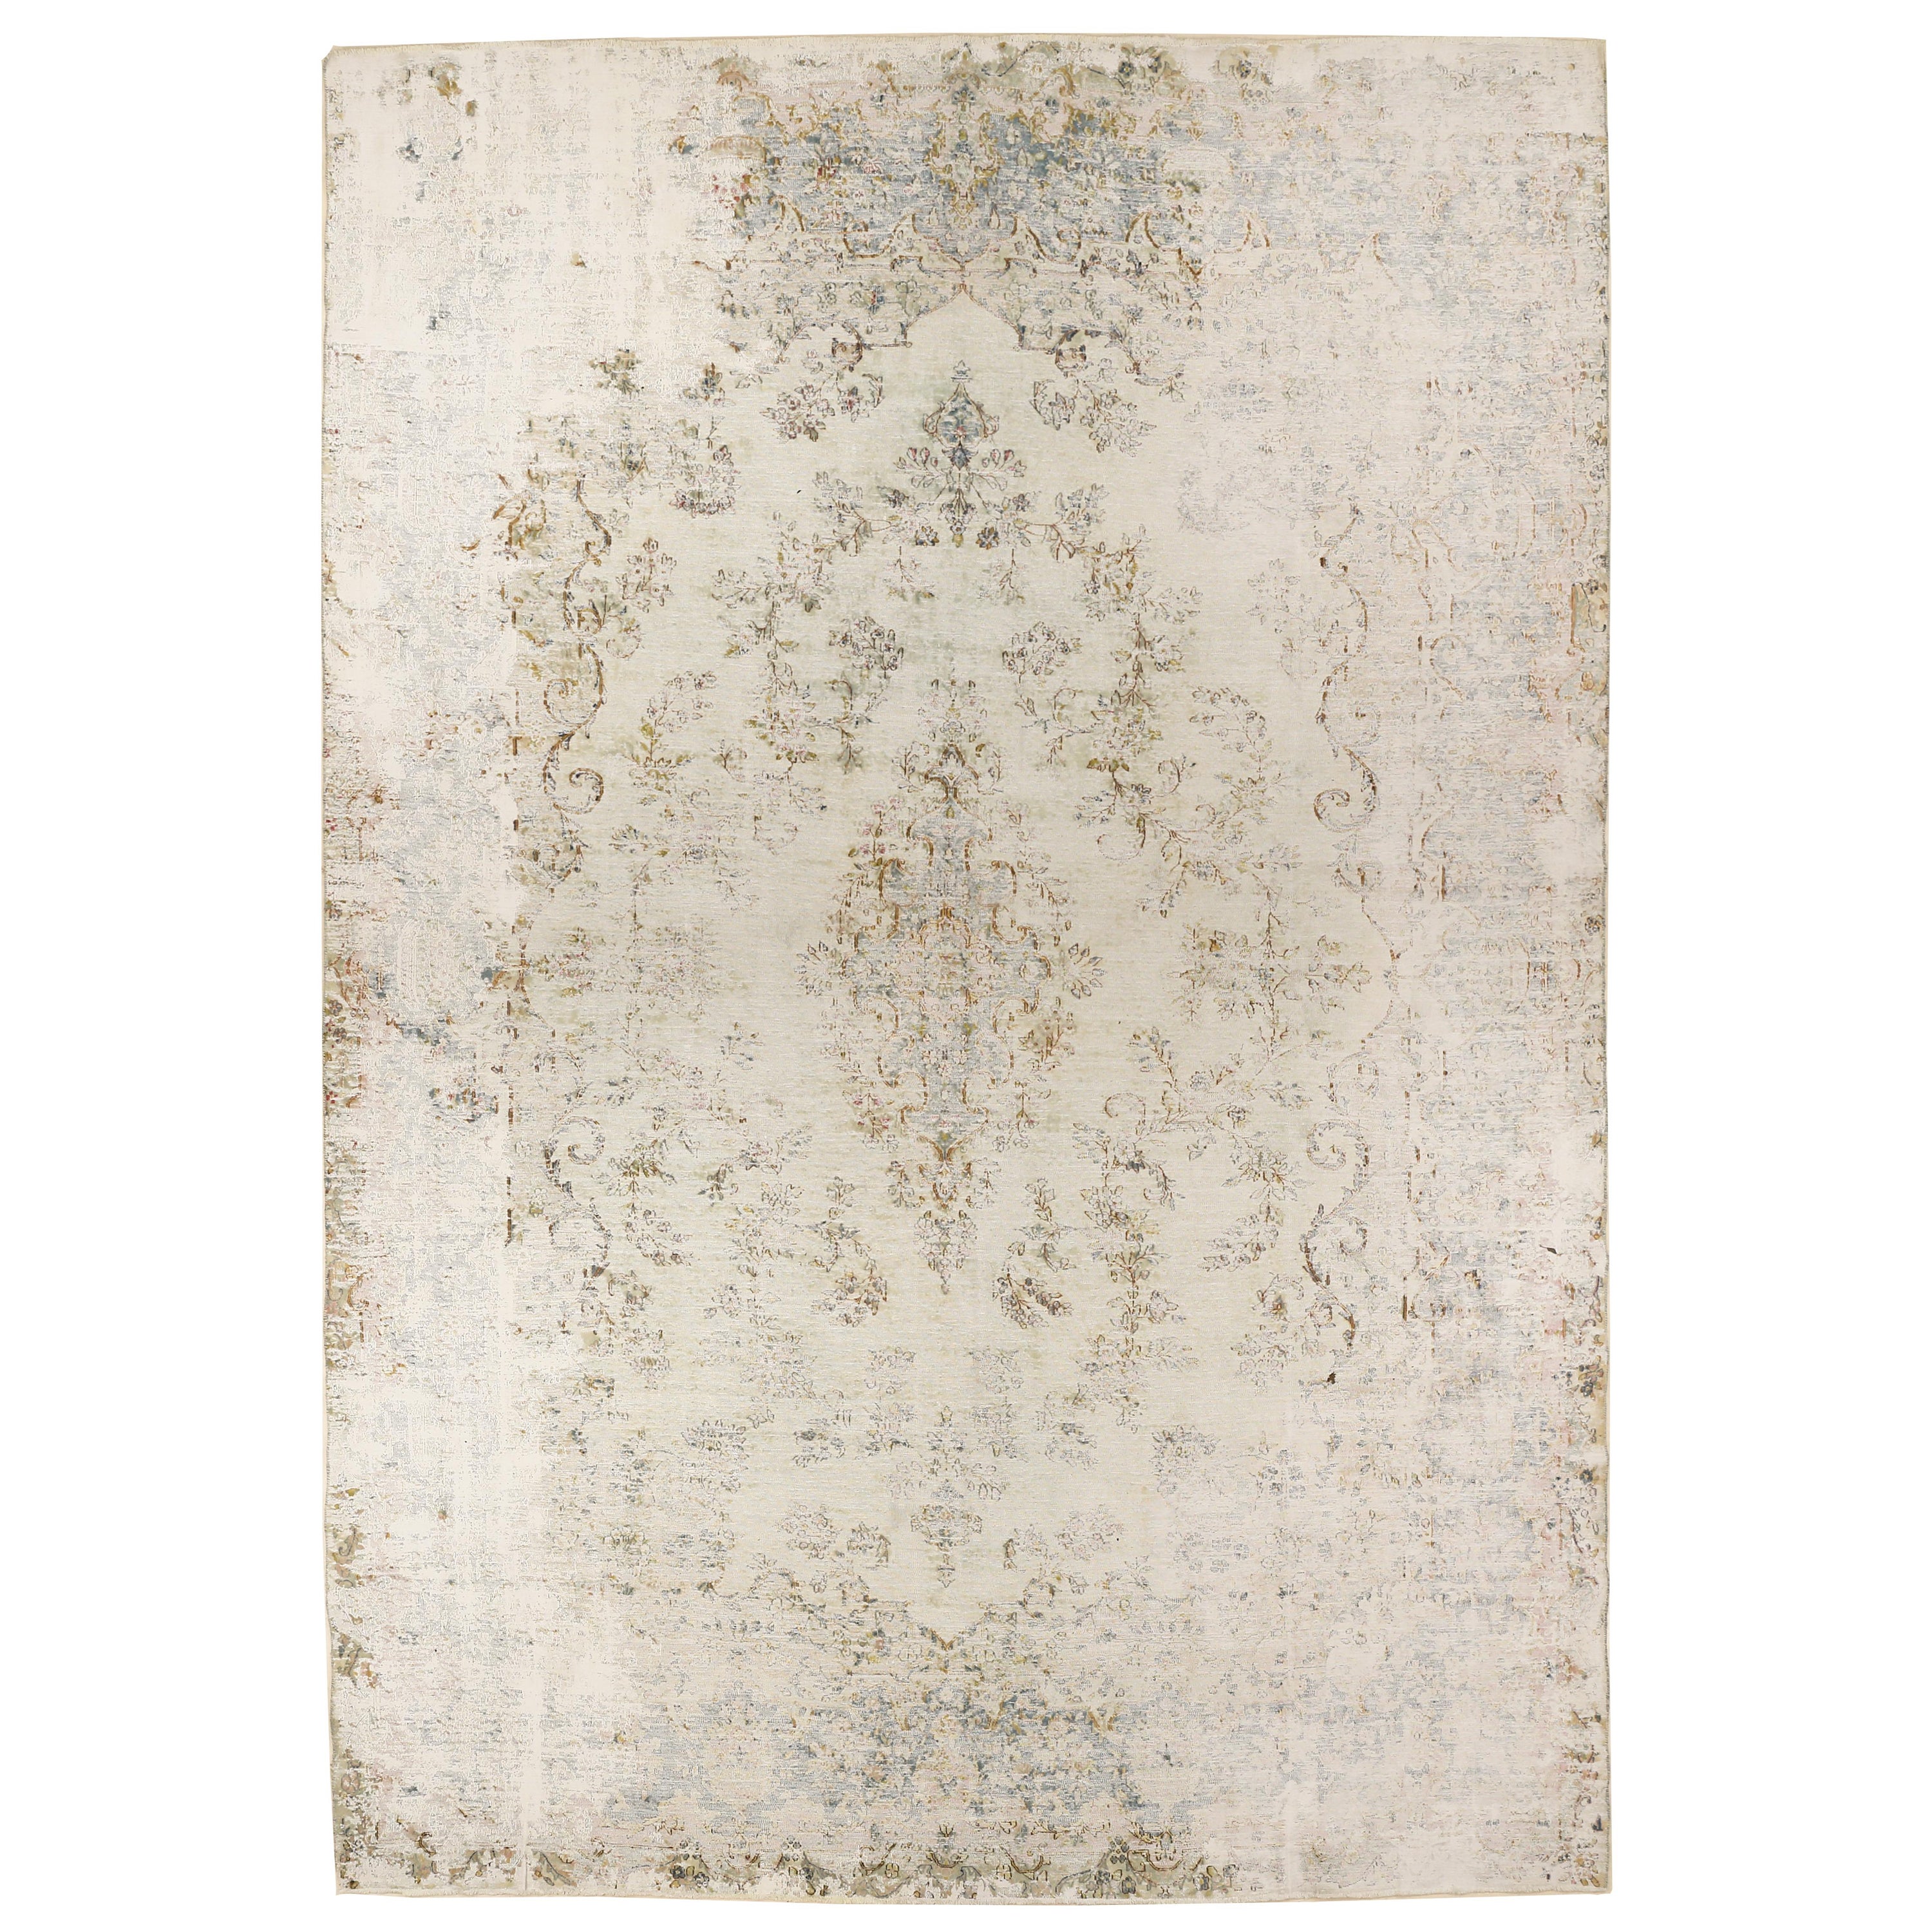 Antique Distressed Soft Coloured Botanical Design Decorative Carpet For Sale